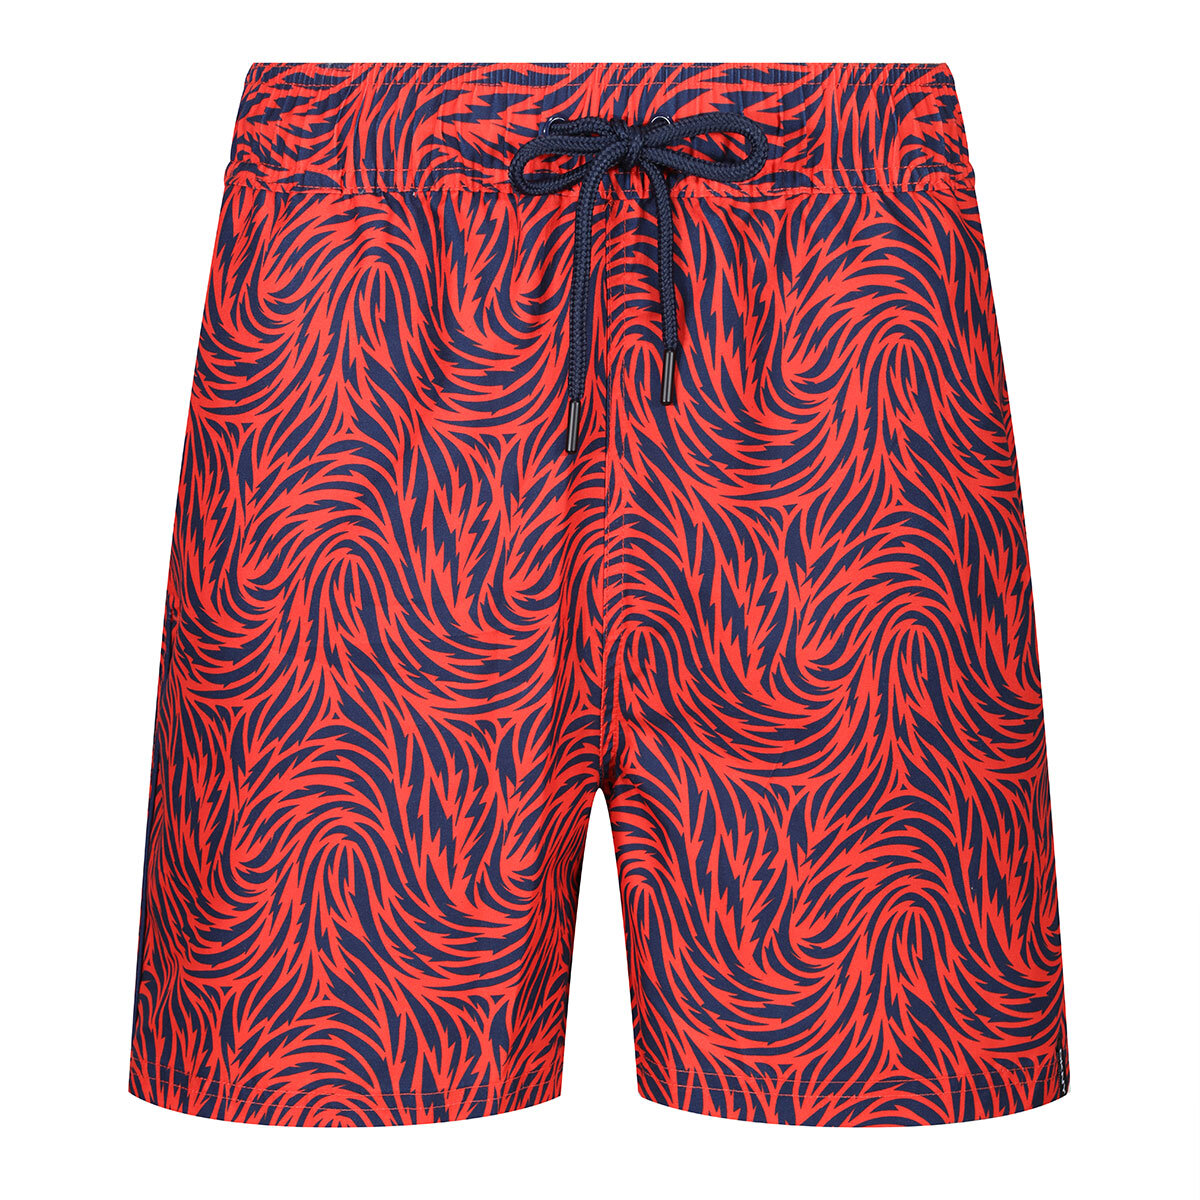 DKNY Mens Swim Shorts in 4 Colours & 4 Sizes